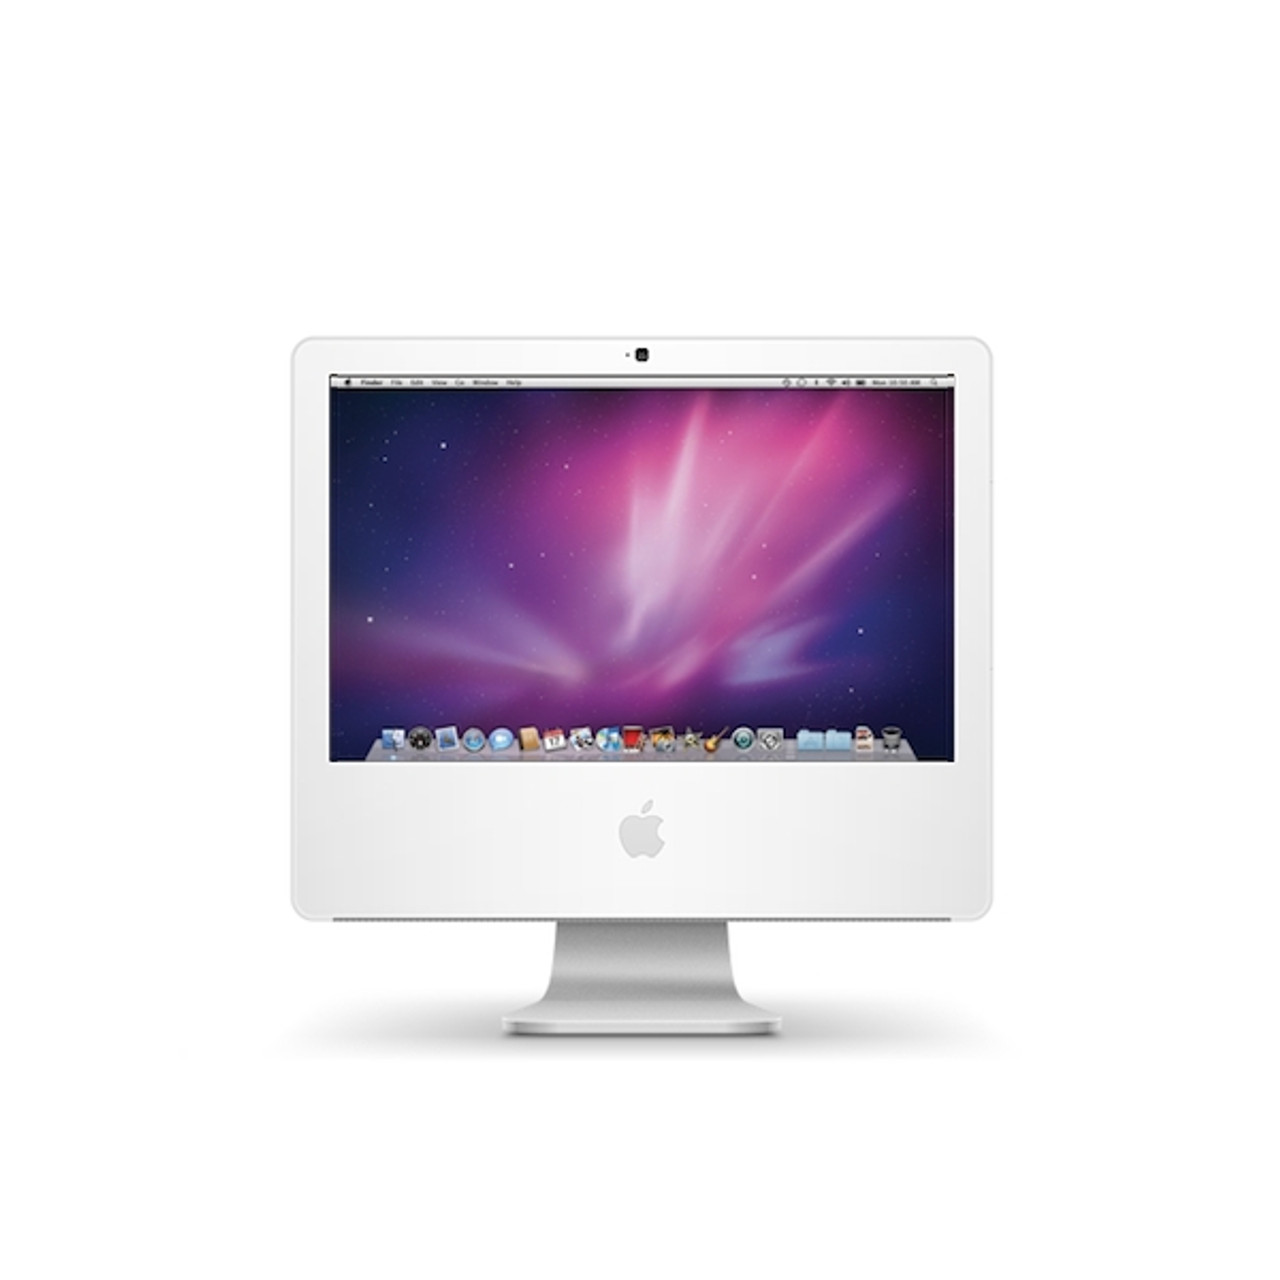 Apple iMac 20-inch, Late 2006 - 2.0GHz Core 2 Duo AIO